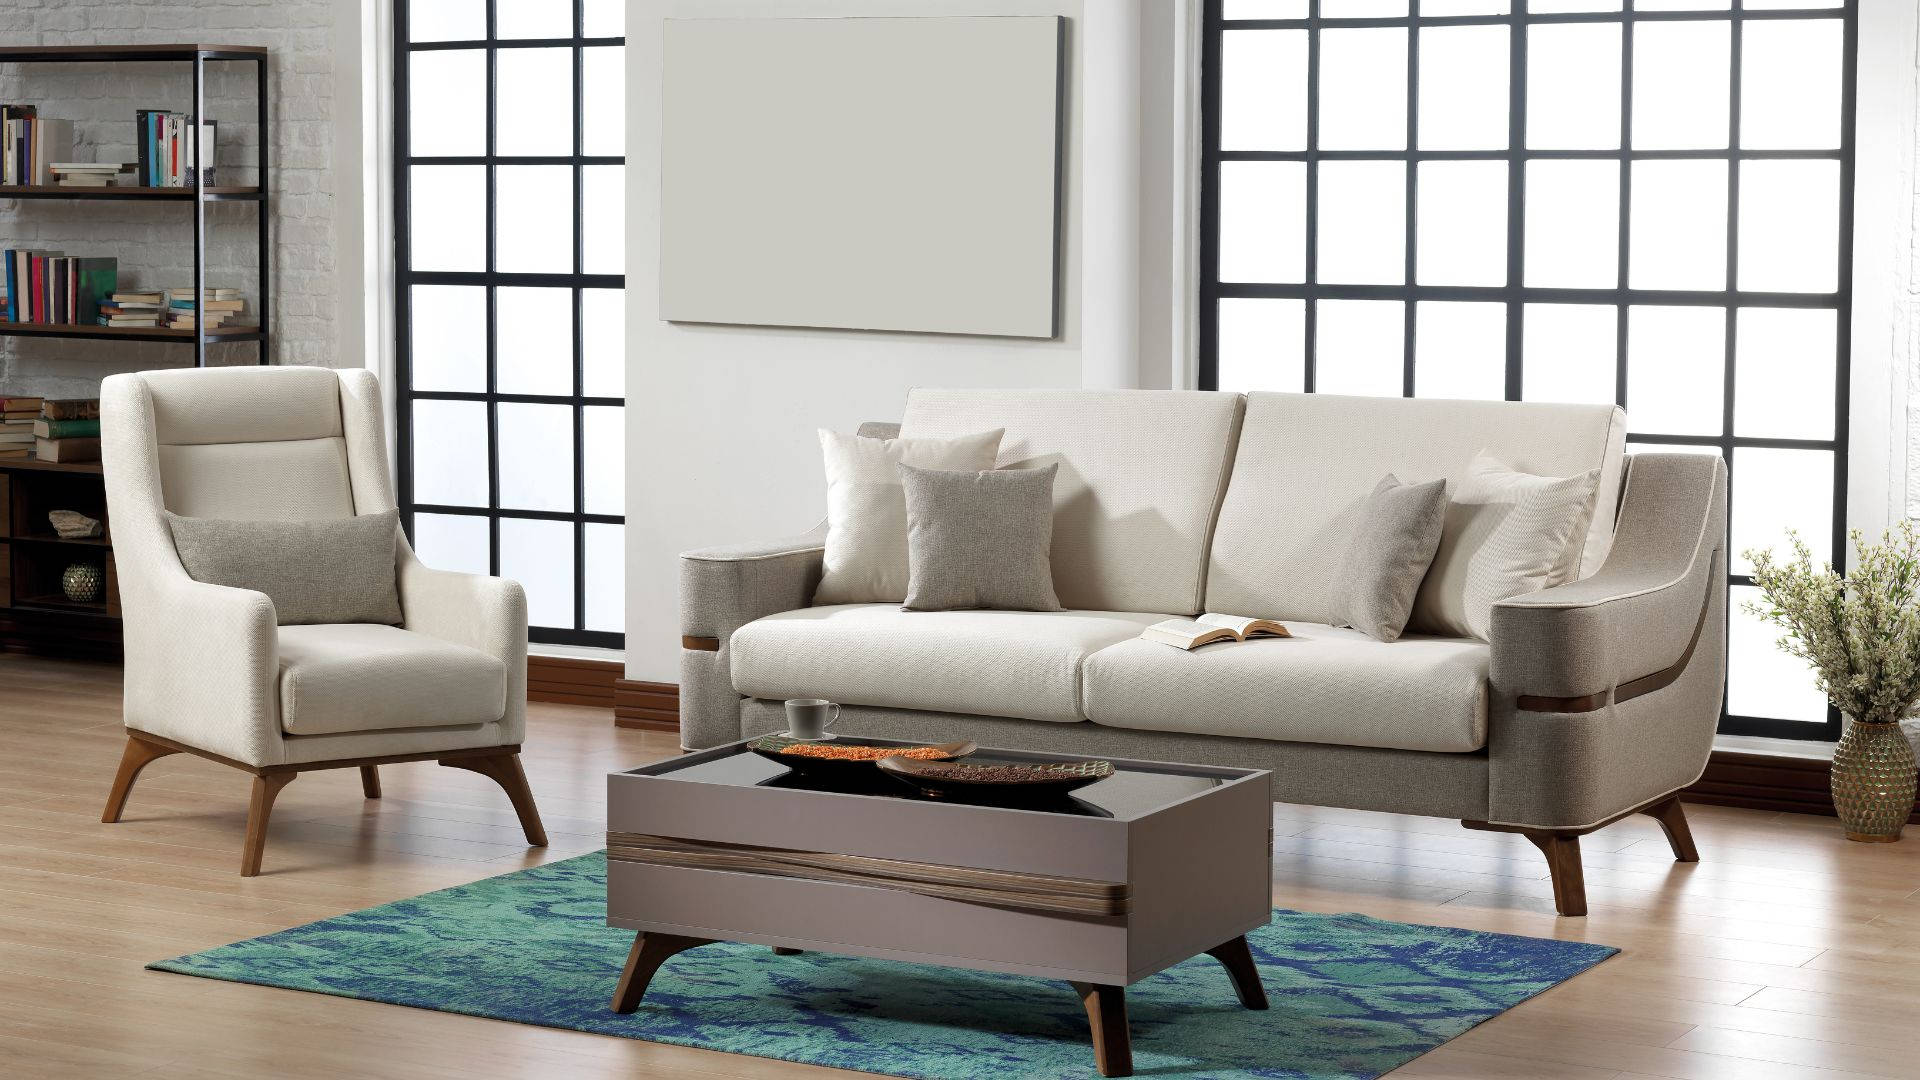 Beige-themed Living Room Furniture Wallpaper